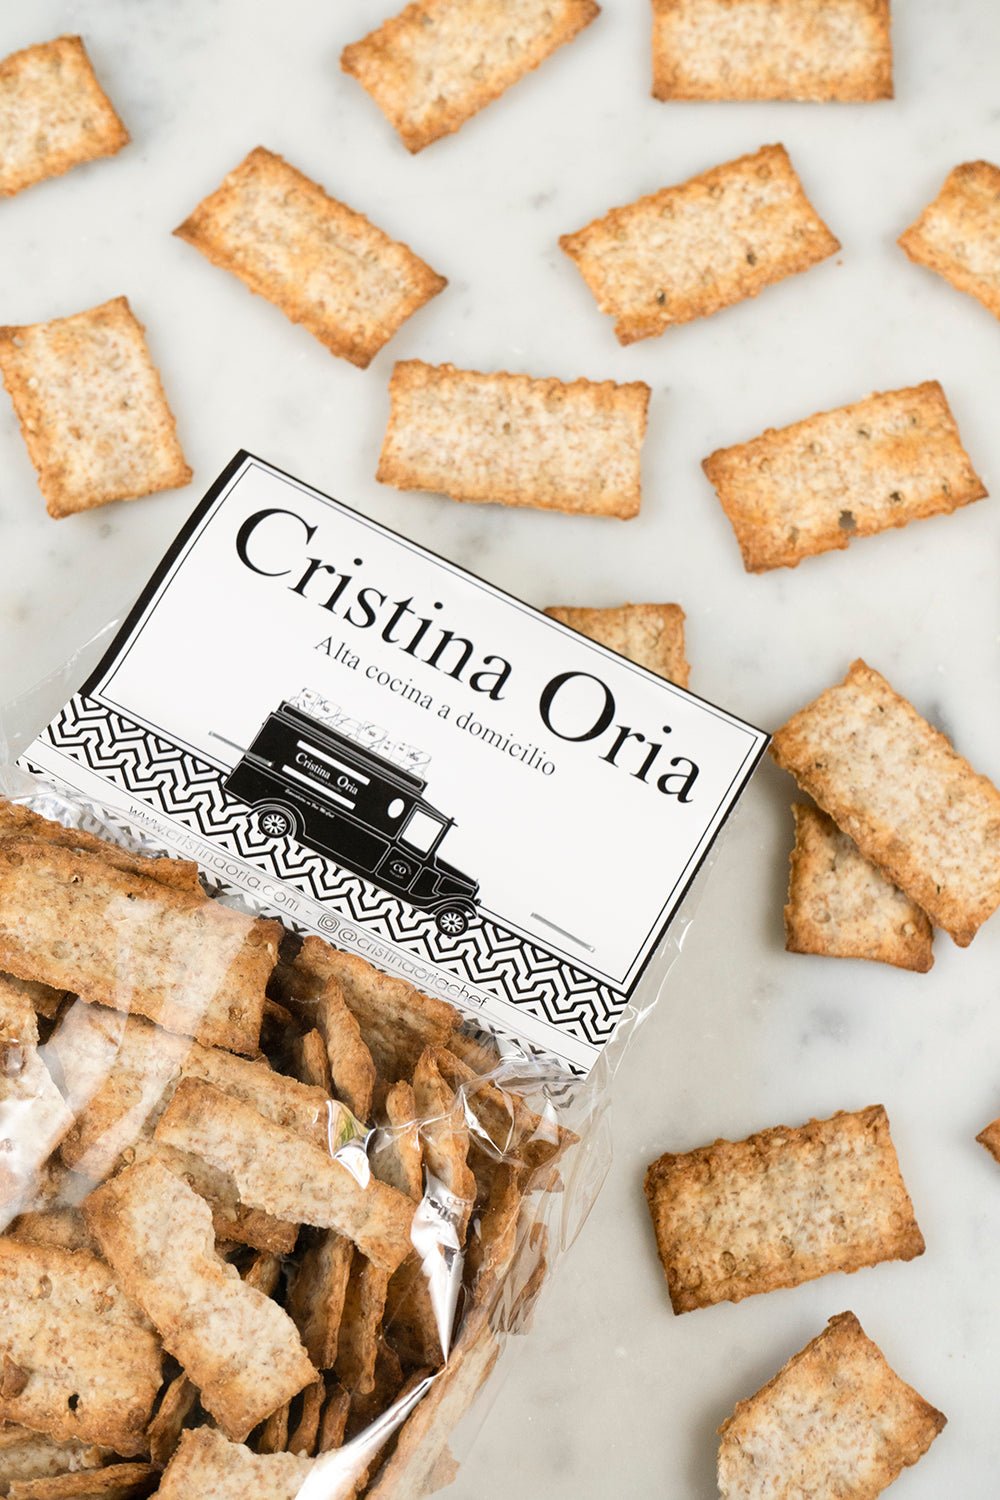 Pan Mini Cracker Fibra - Cristina Oria